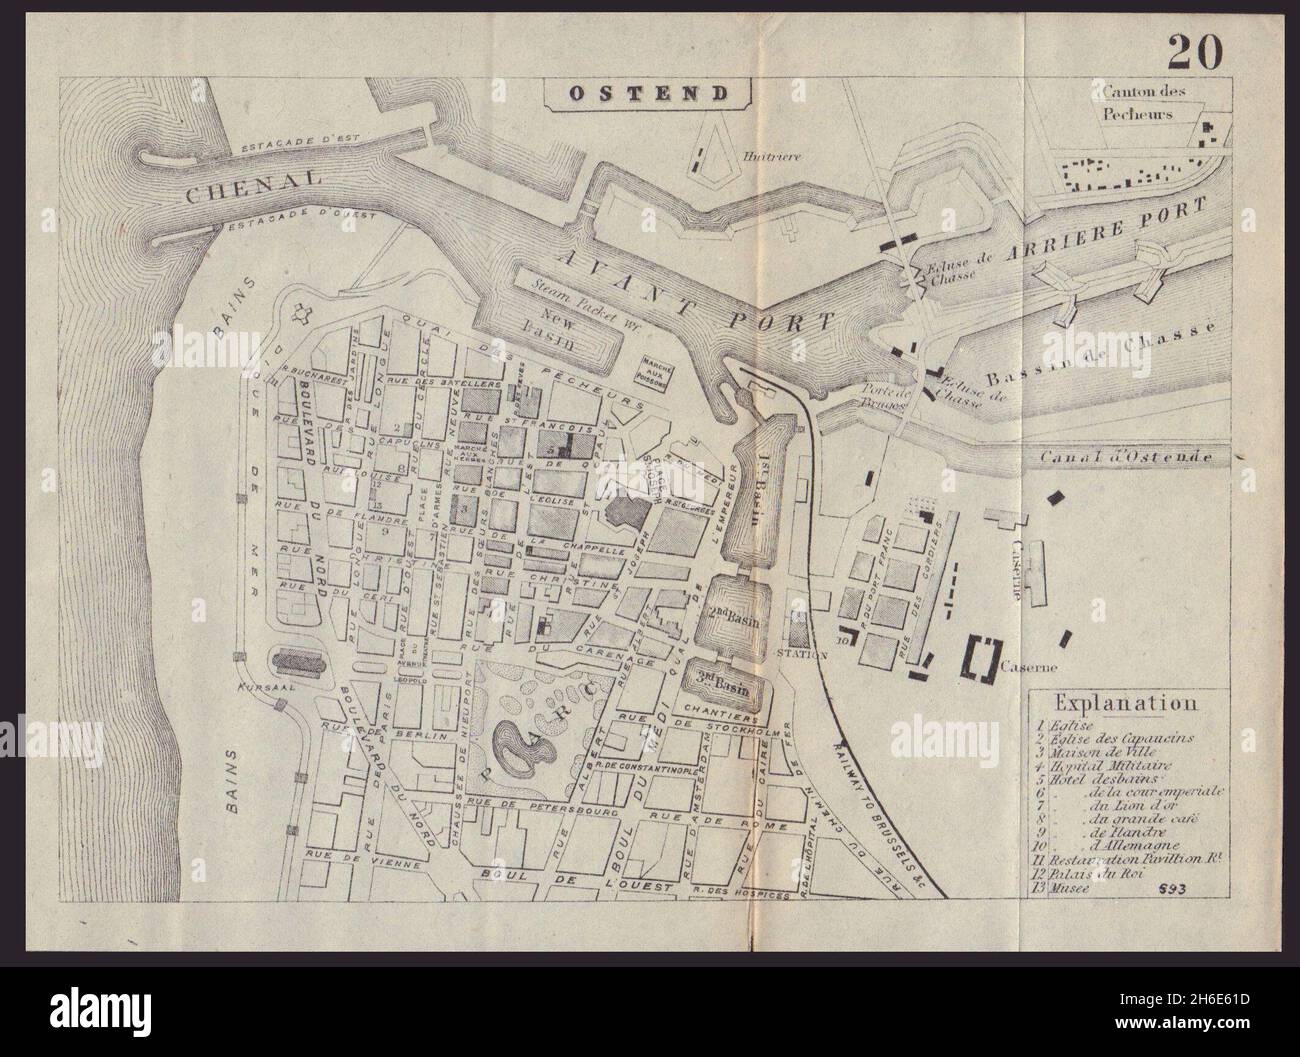 OSTEND OOSTENDE OSTENDE antique town plan city map. Belgium. BRADSHAW 1893 Stock Photo